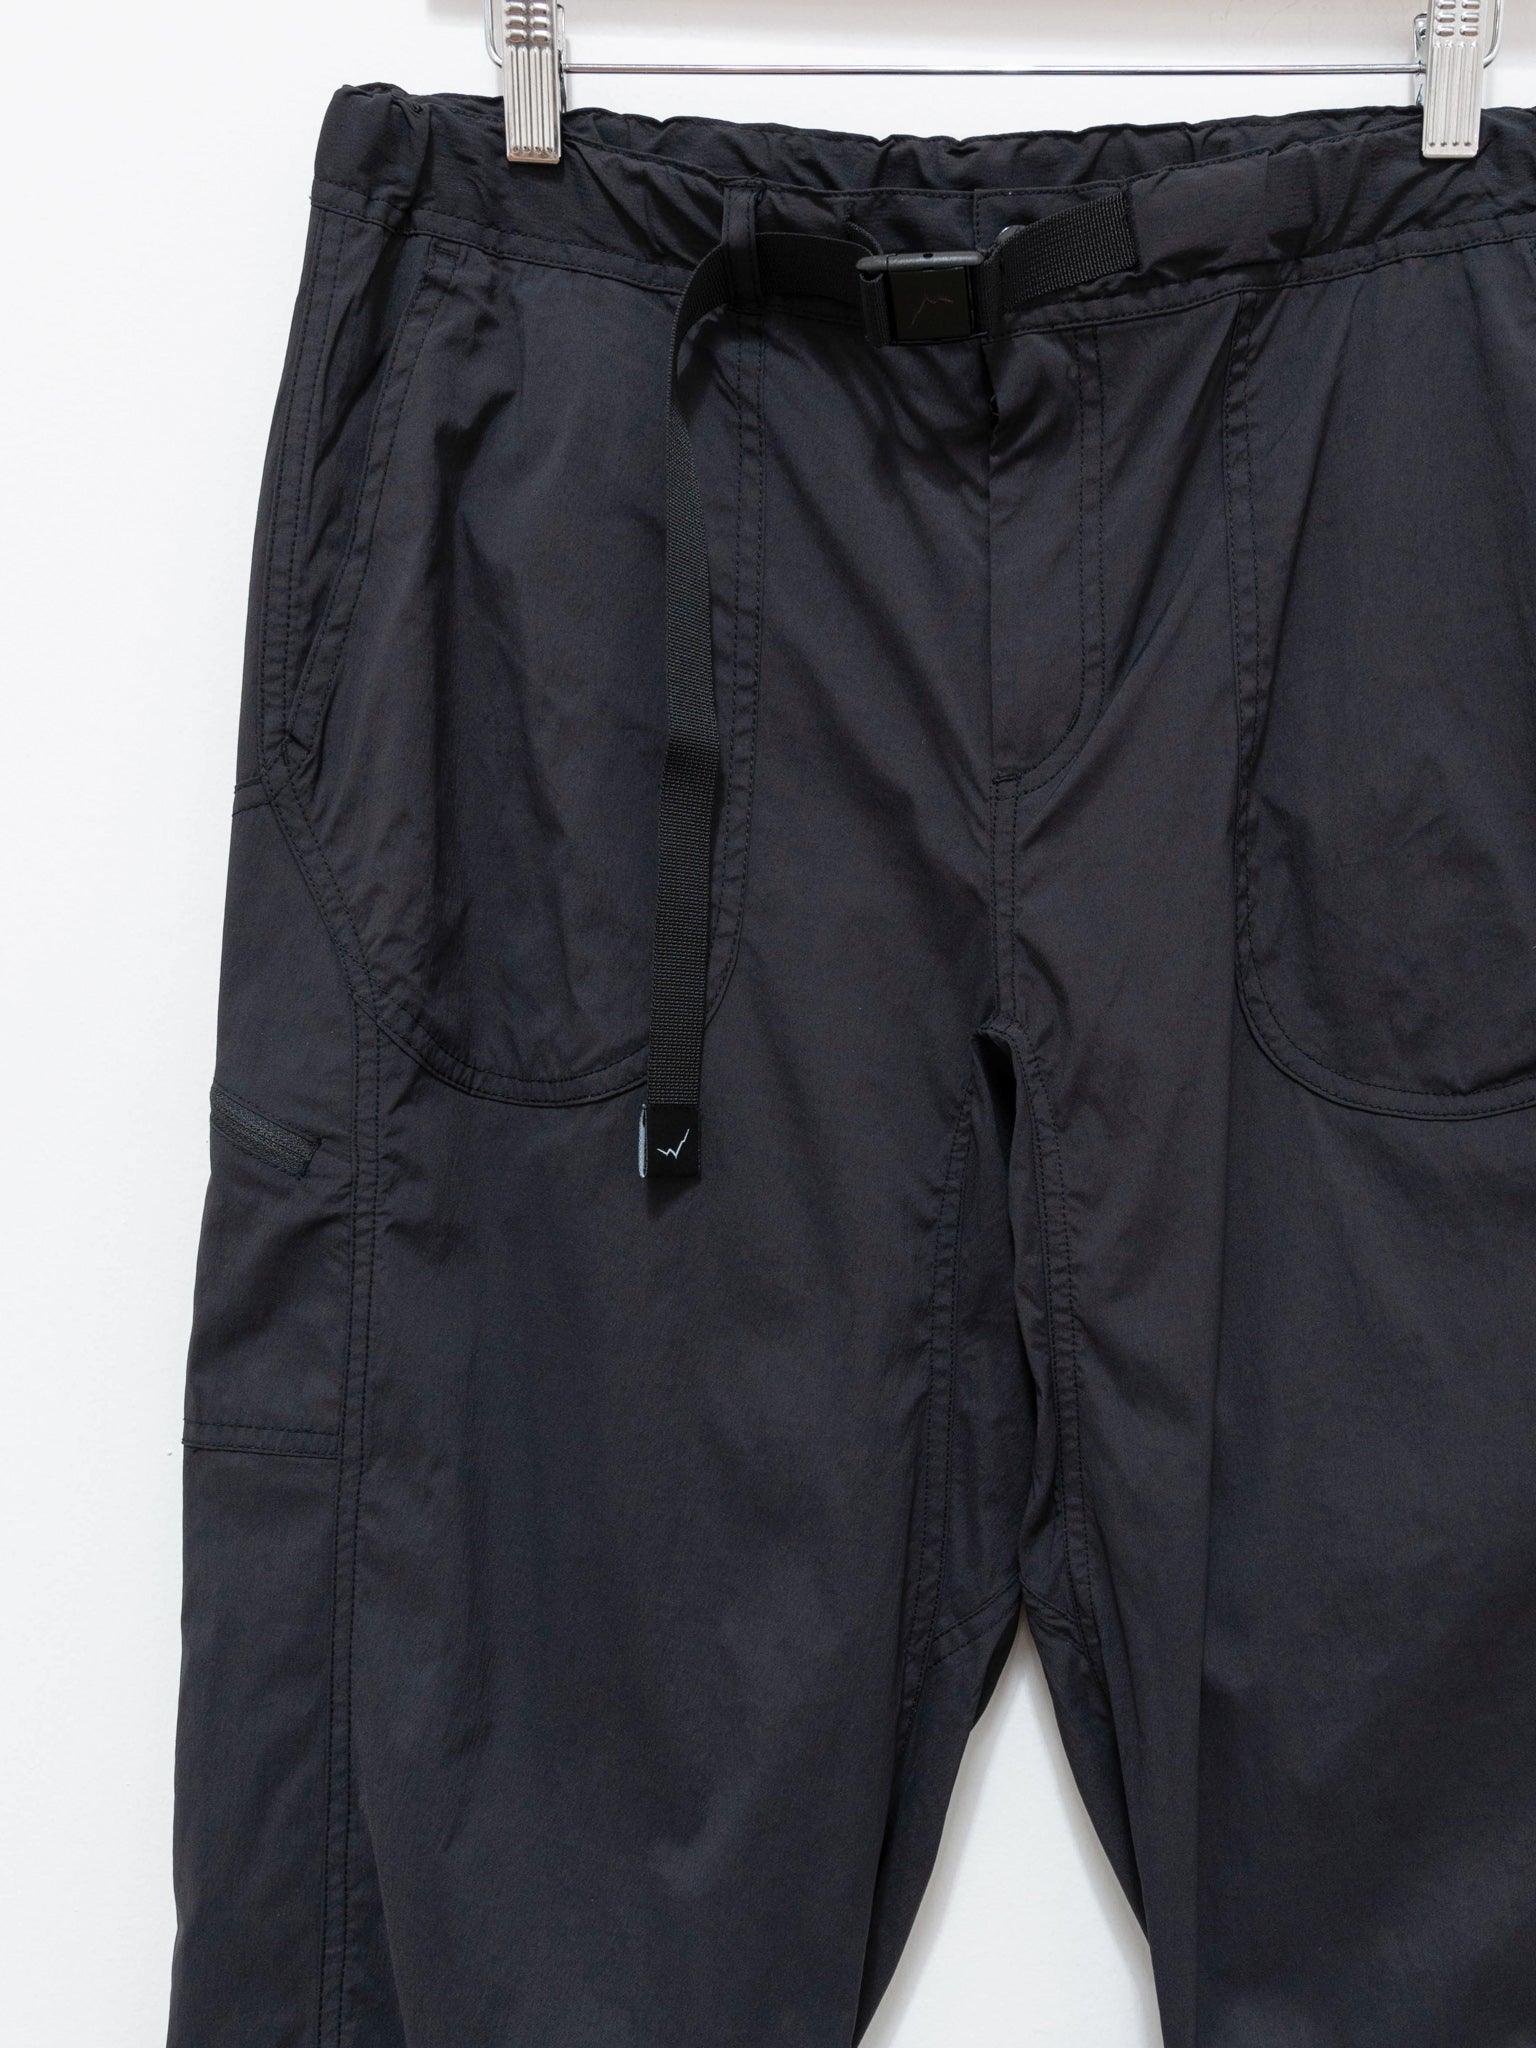 Namu Shop - CAYL 6 Pocket Hiking Pant - Black